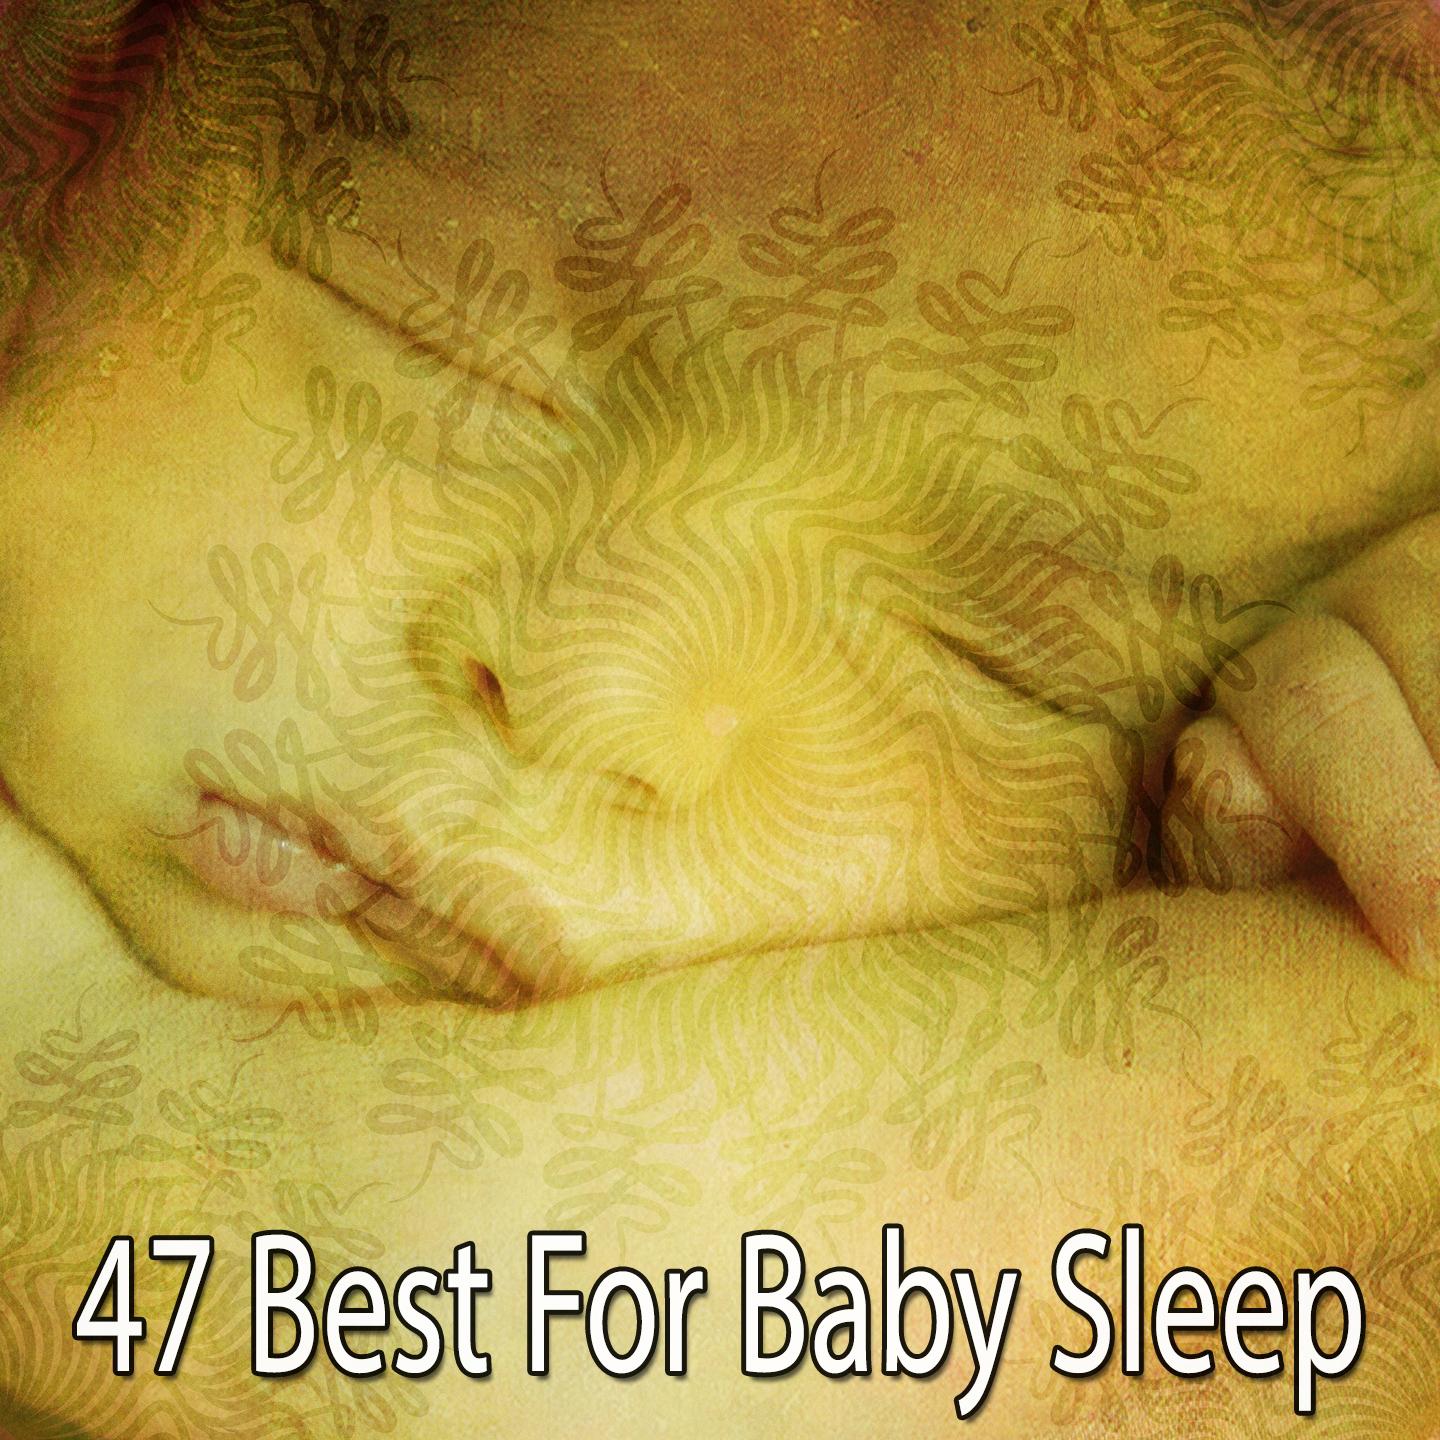 47 Best for Baby Sleep